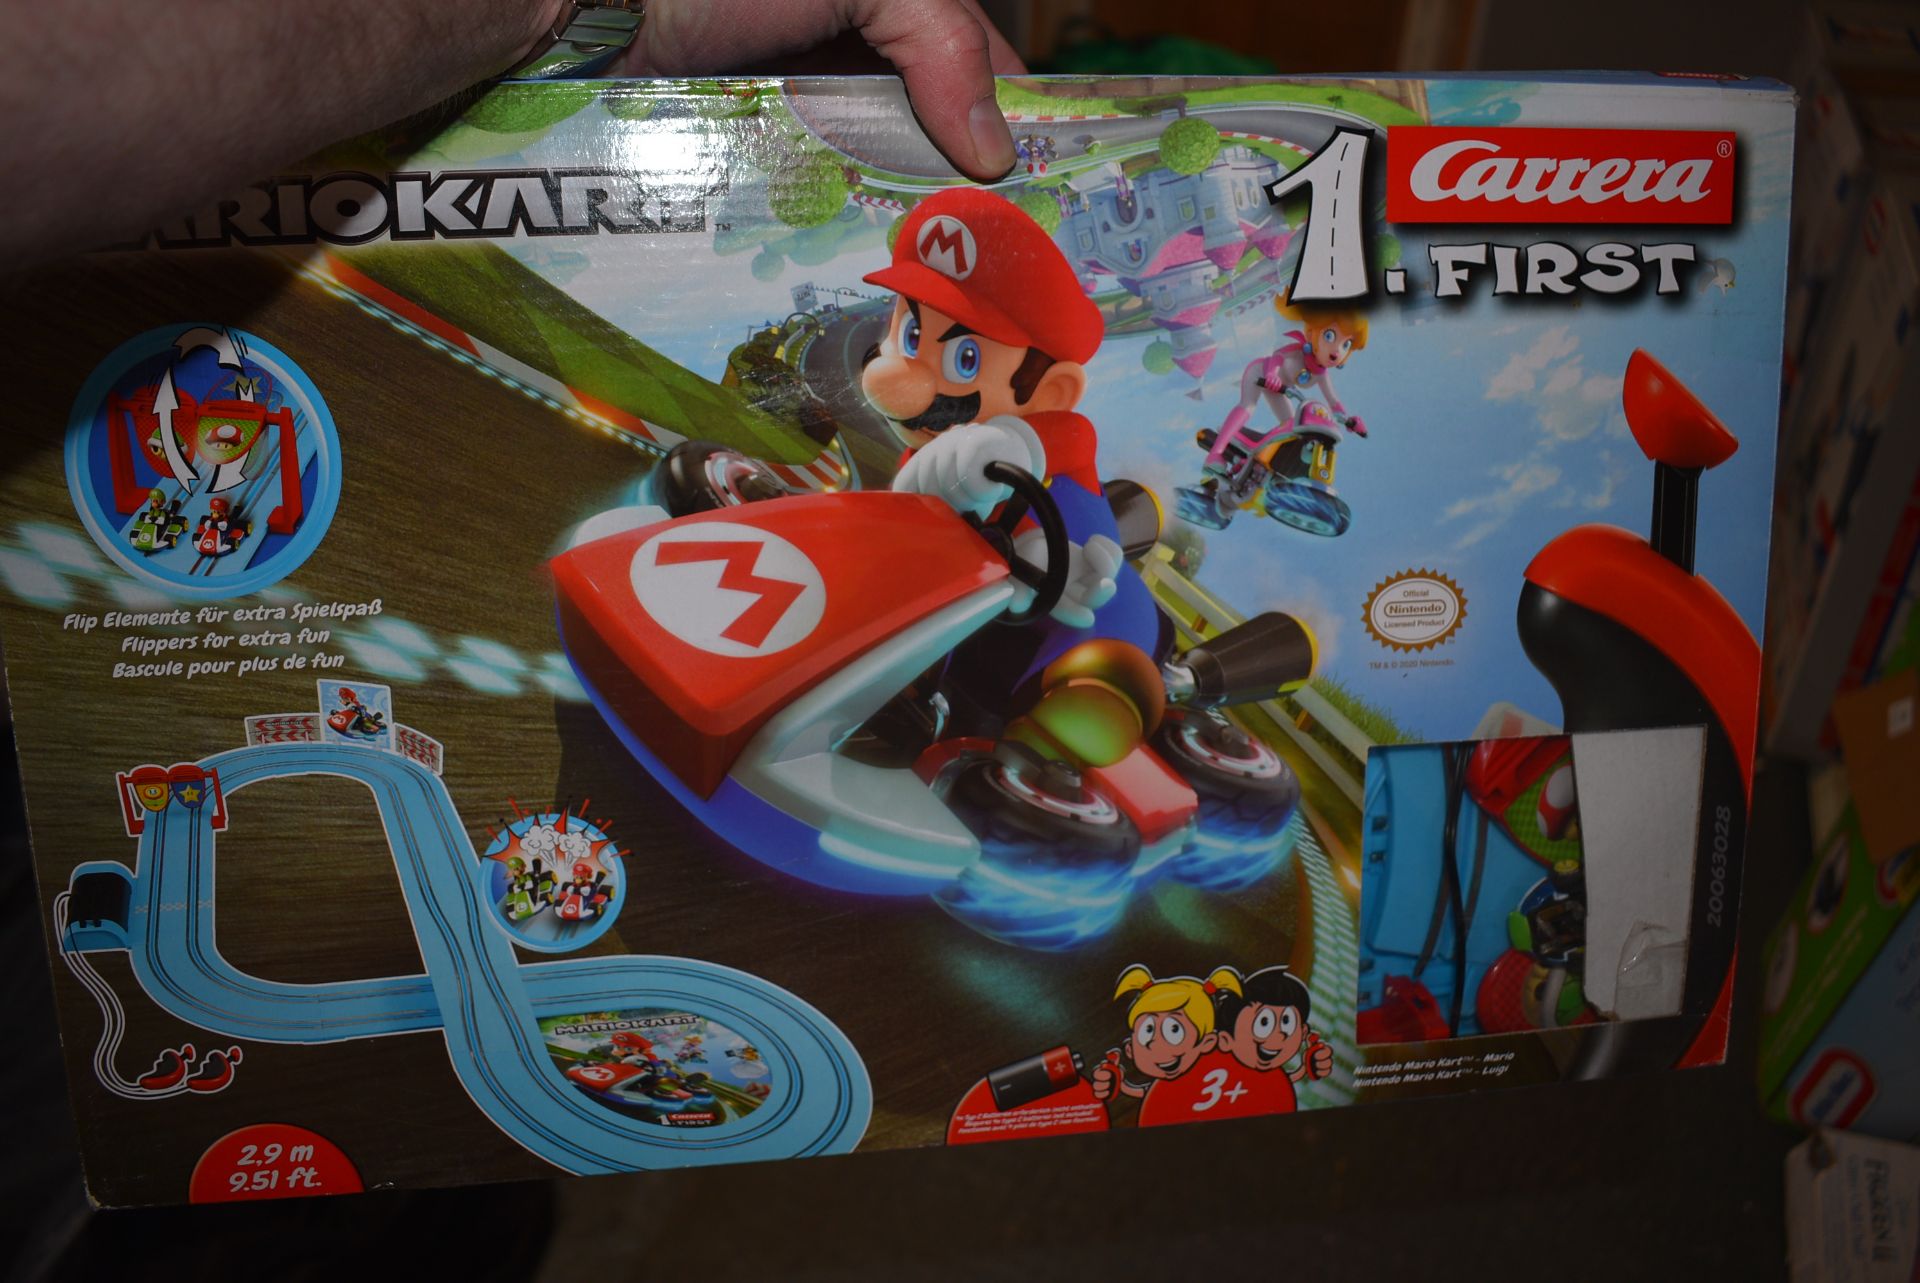 Carrera Mario Kart Track and Cars Set - Image 2 of 4